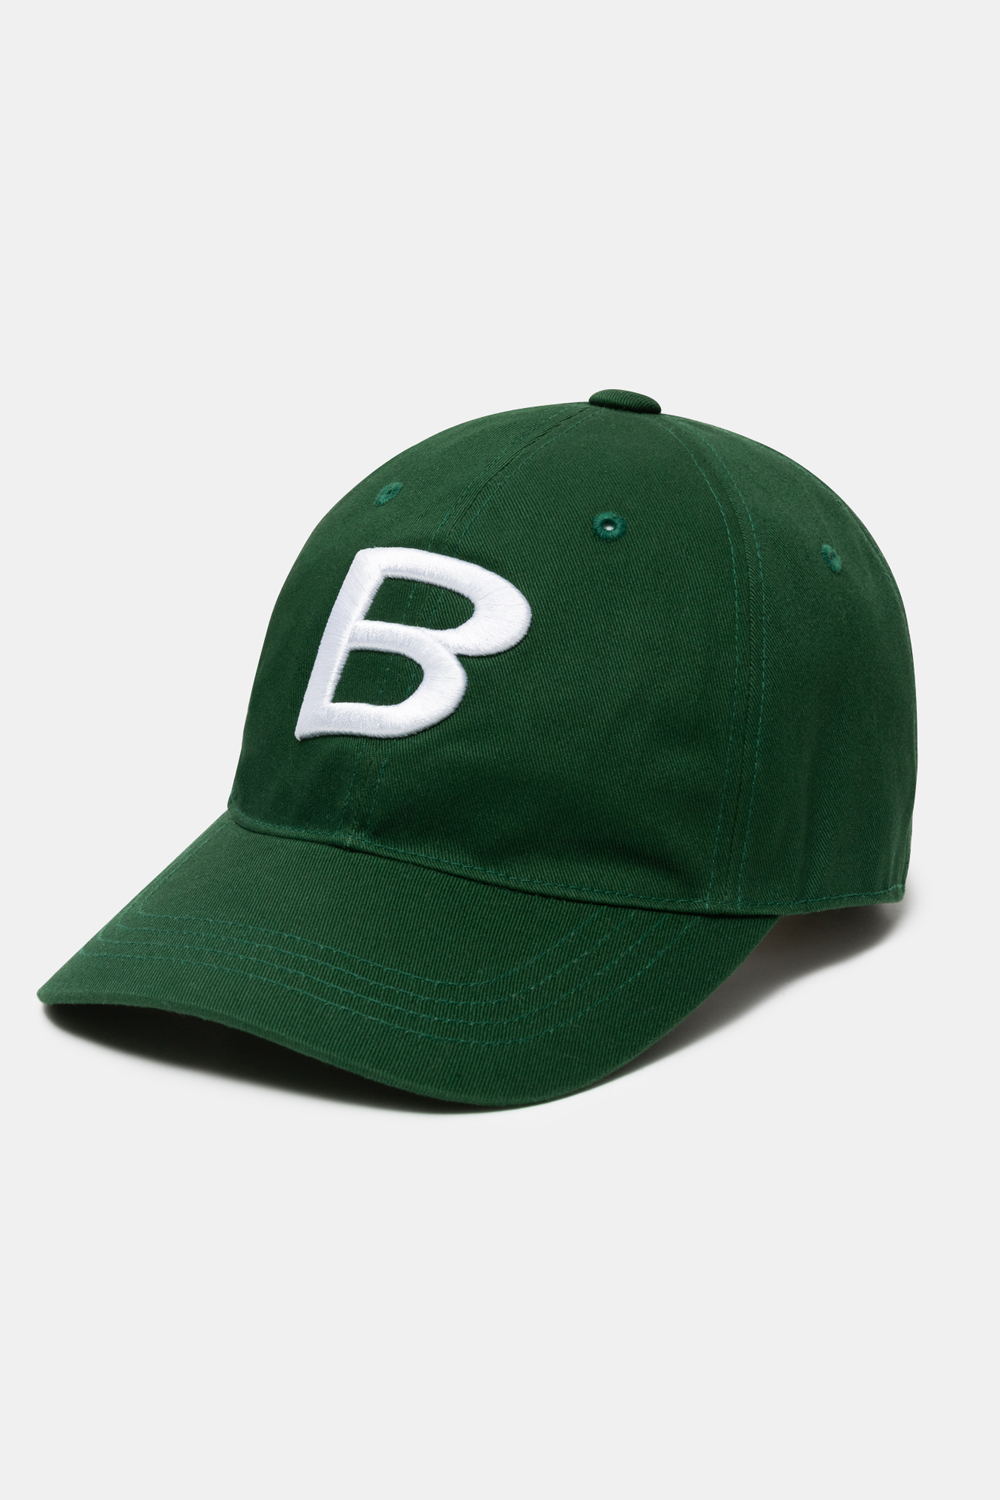 B LOGO BALL CAP - BRIGHT GREEN